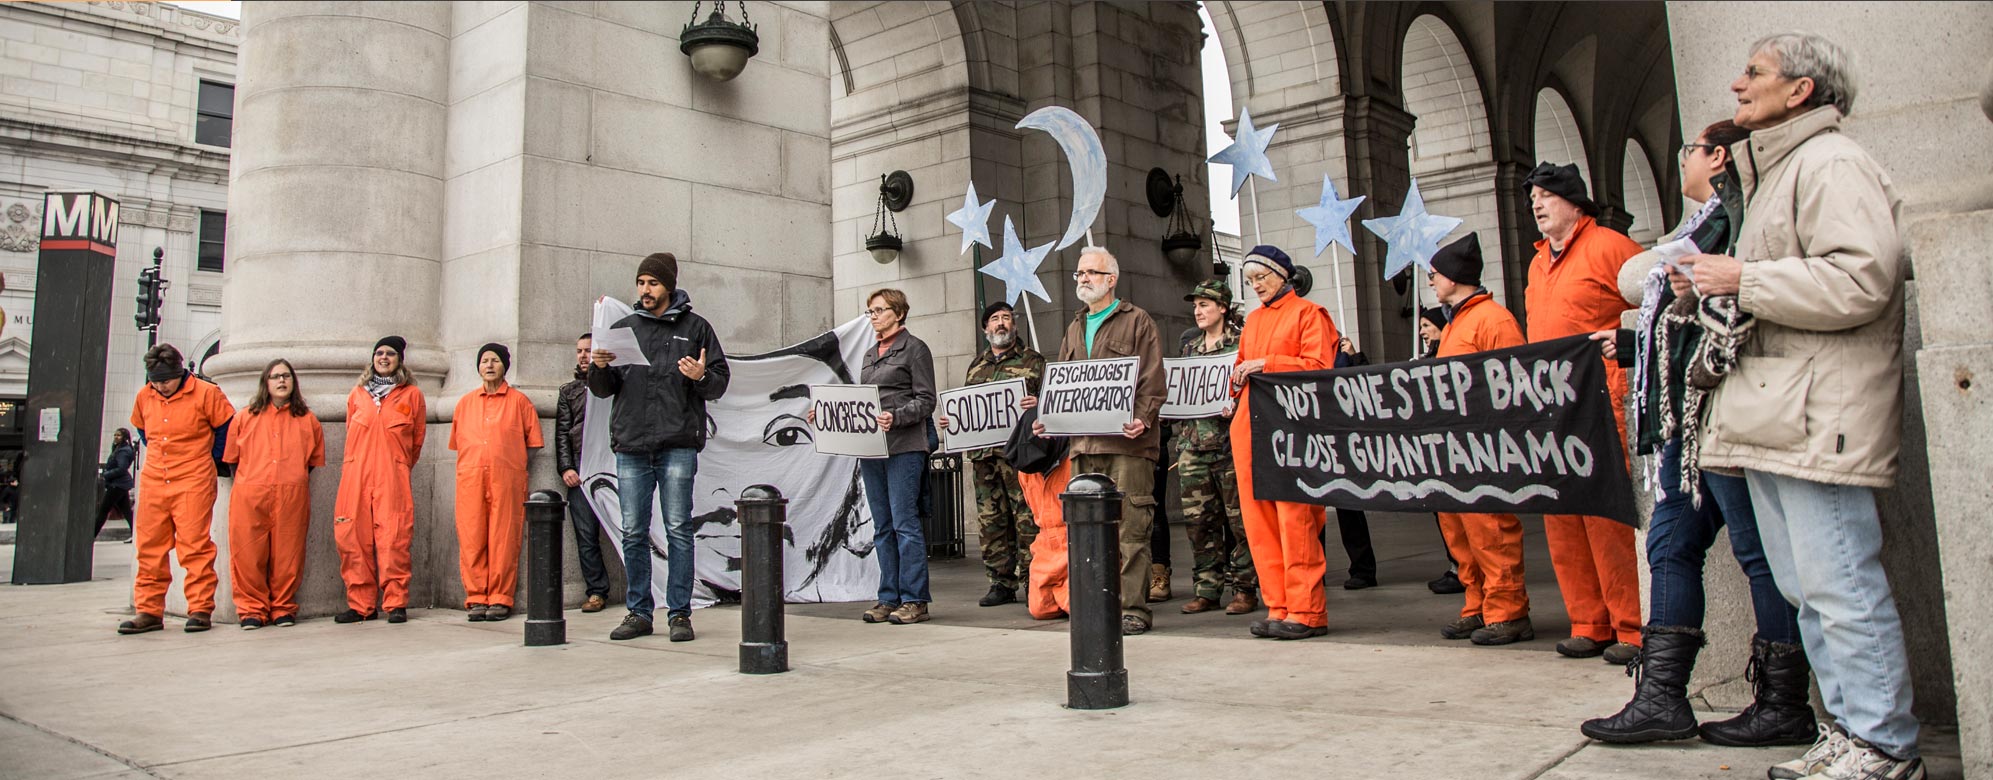 Witness Against Torture at Union Station, Washington DC